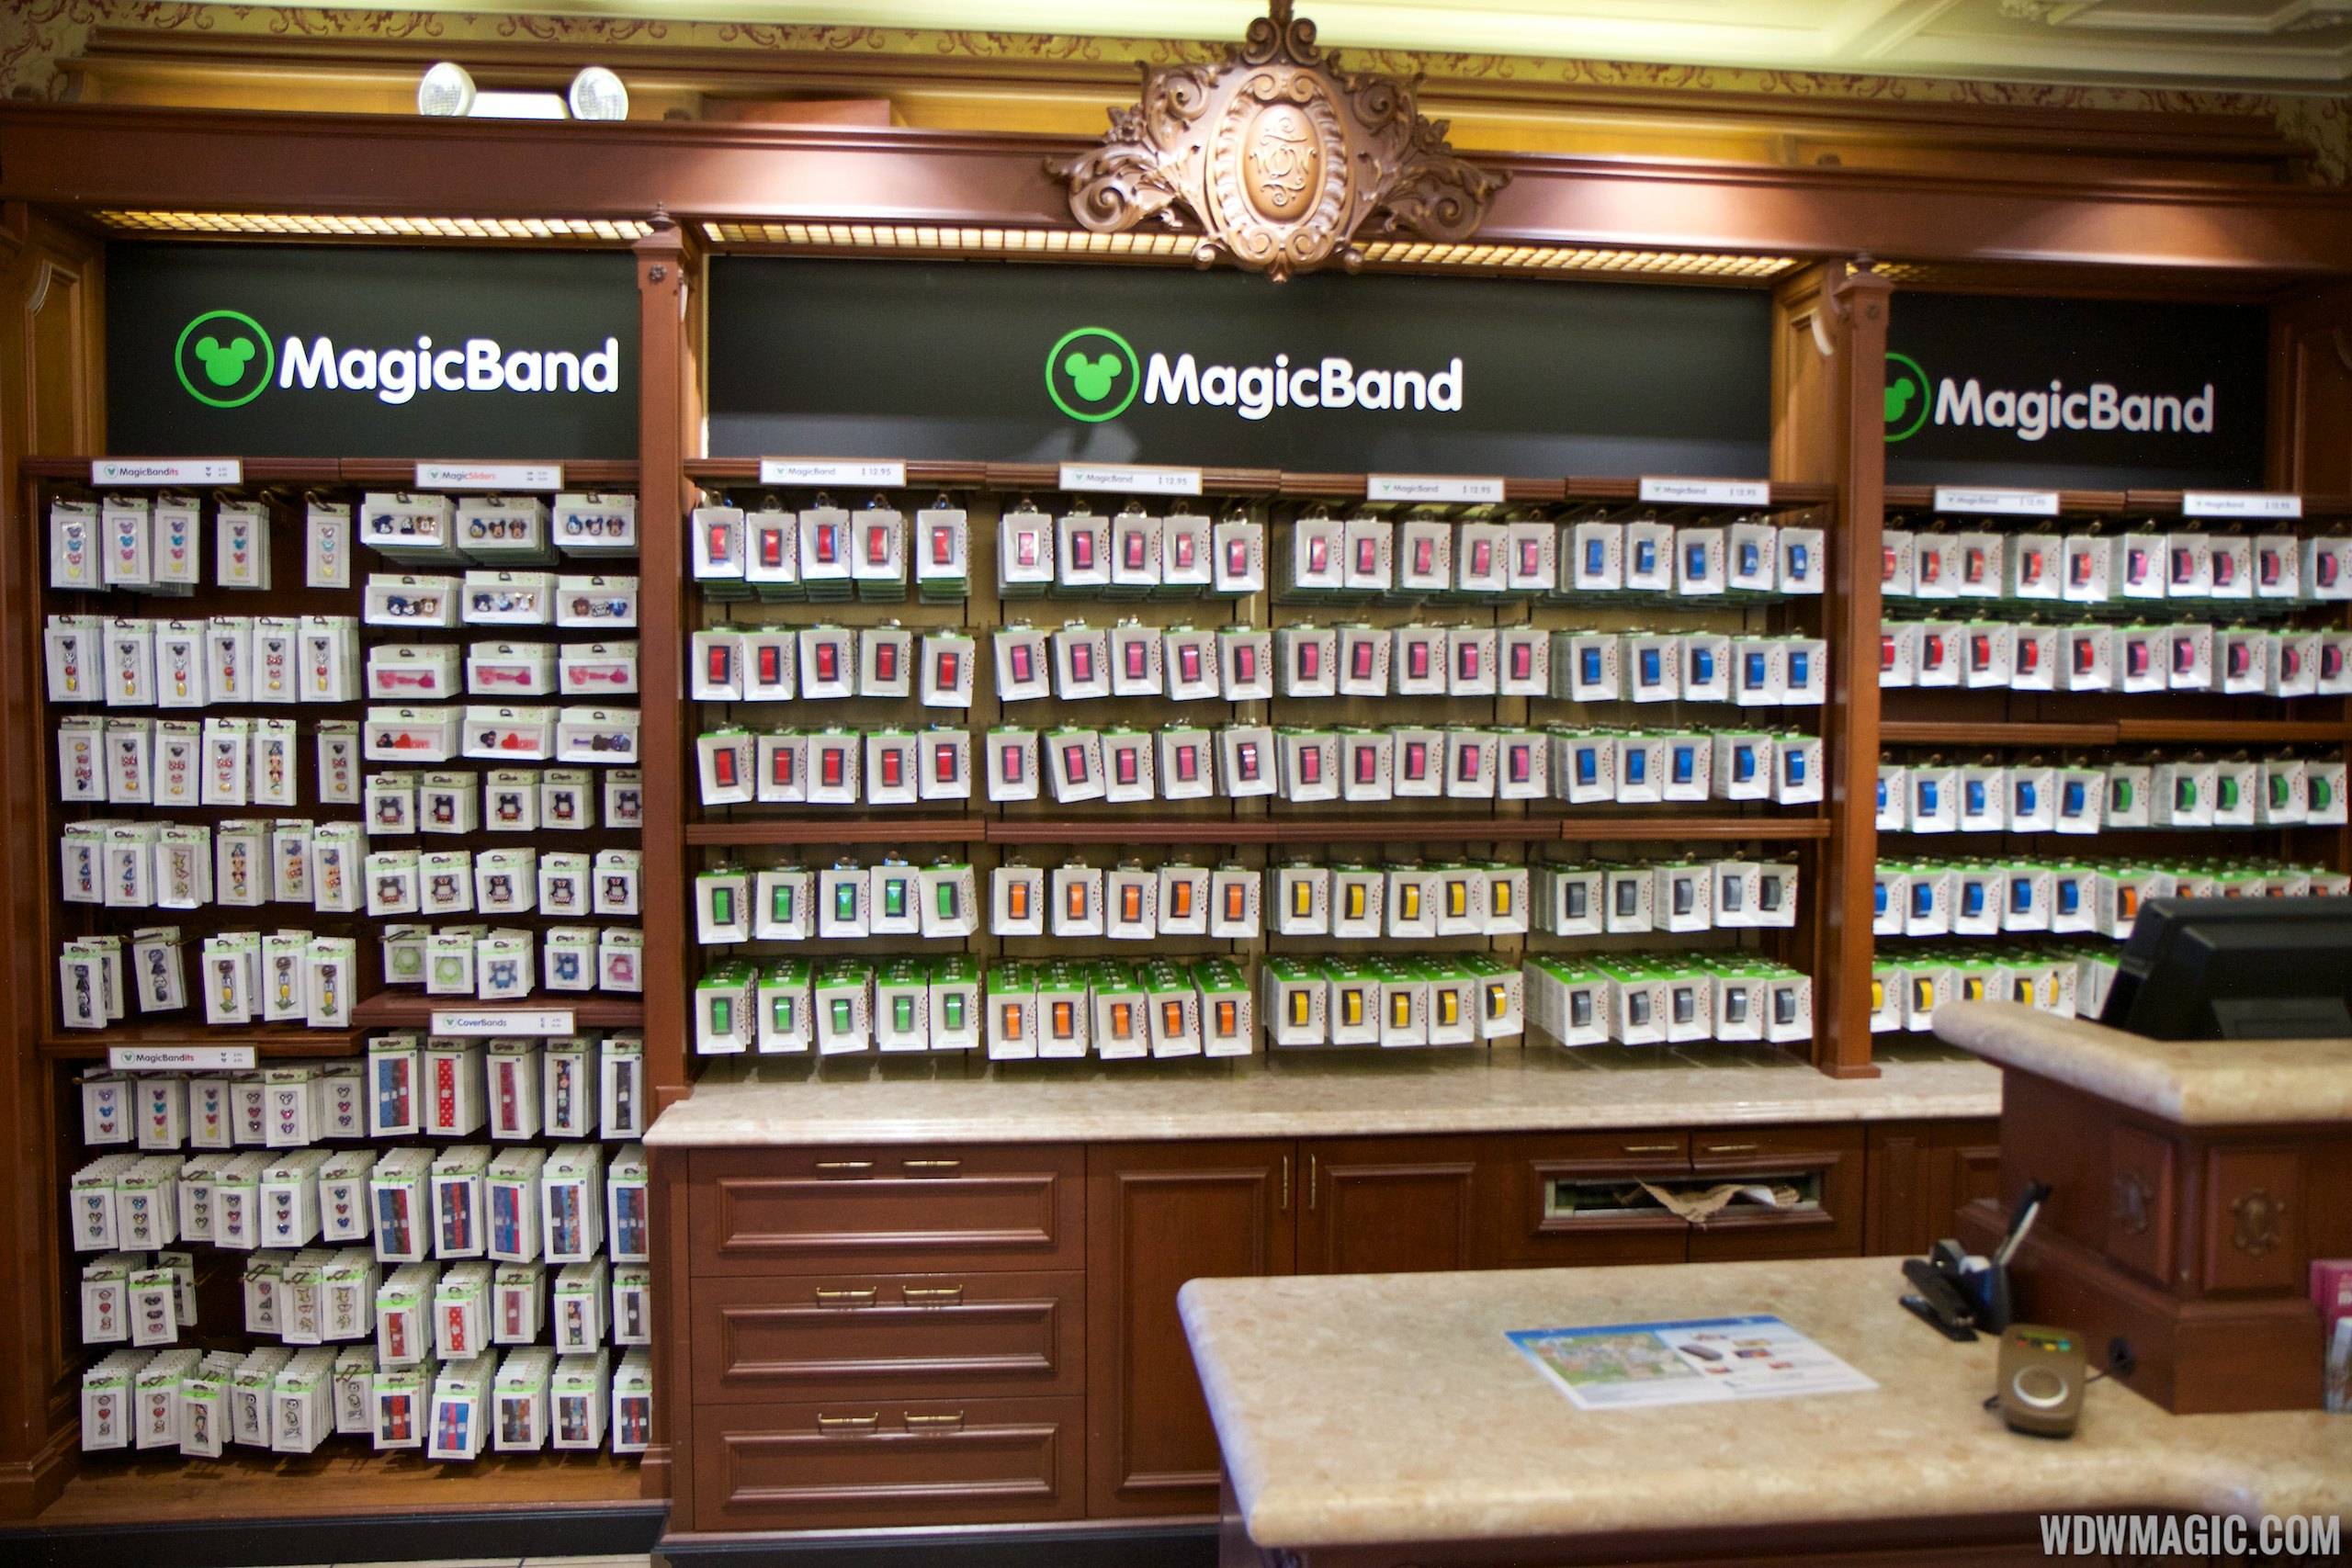 MagicBand retail display at the Magic Kingdom's Emporium